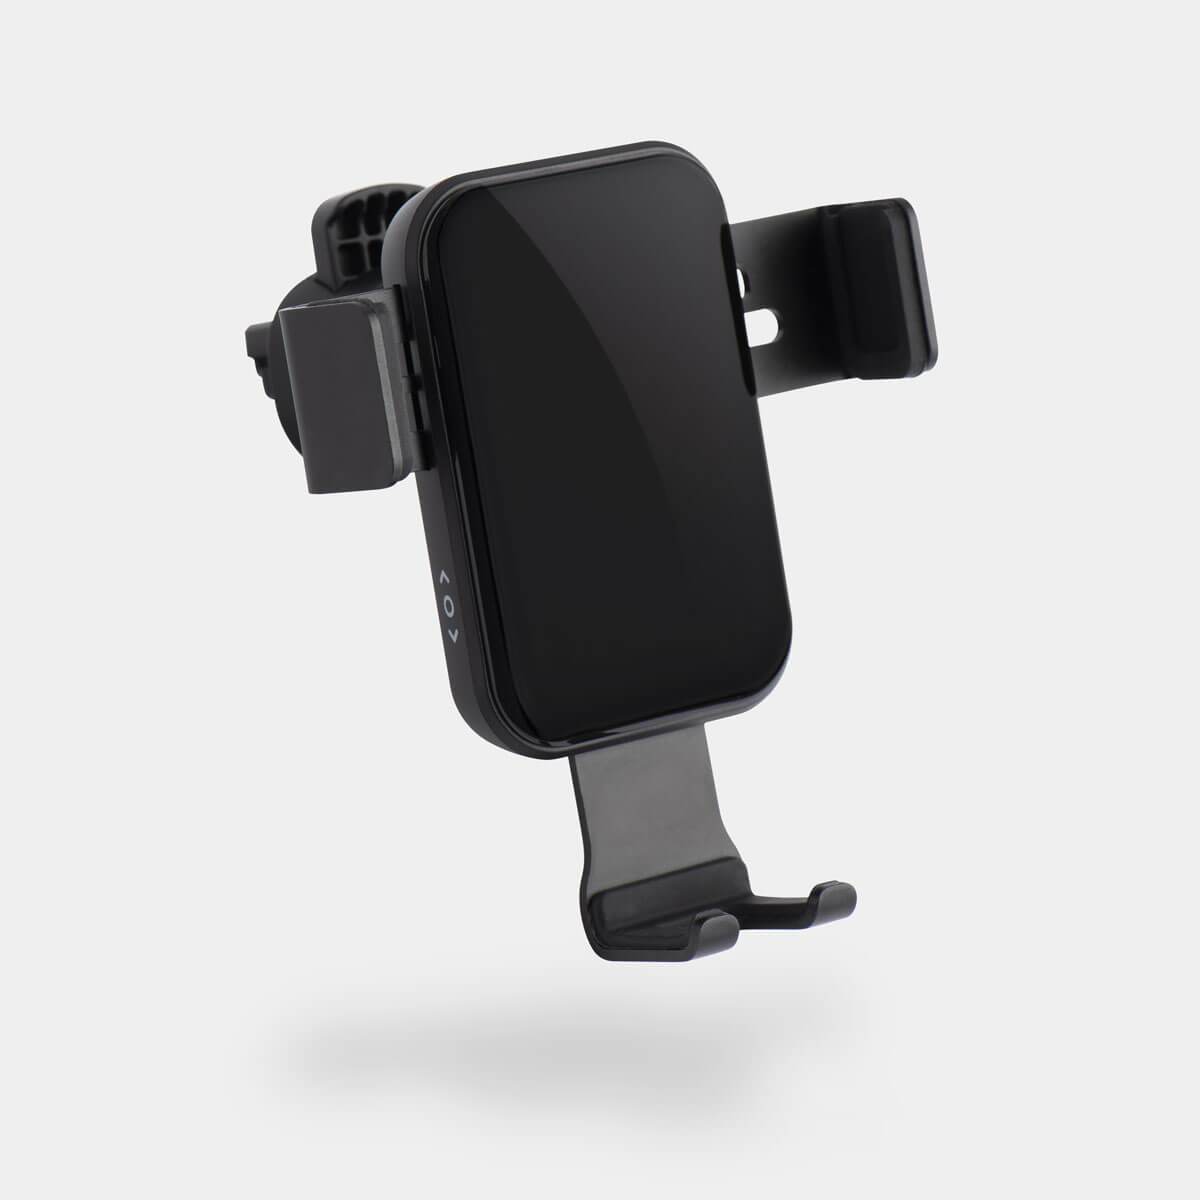 Smart Car Wireless Charger Phone Holder, 2021 Smart Wireless Auto-Sensing  Car Phone Holder Charger, Wireless Car Charger Car Phone Holder Air Vent